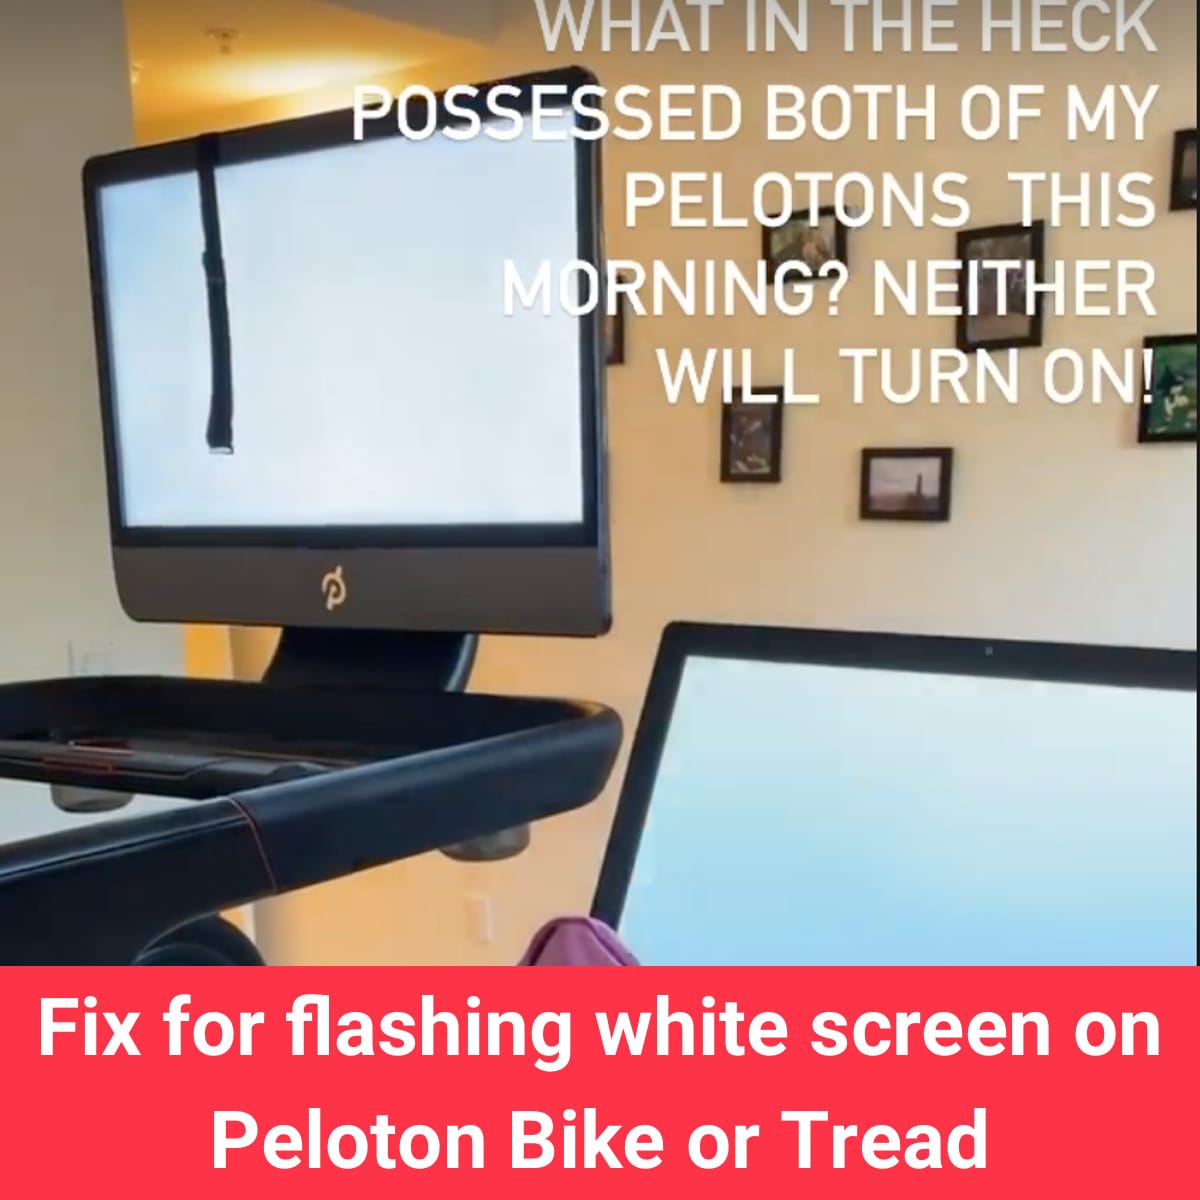 Fix Flashing White Screen On Peloton: Quick Solutions!